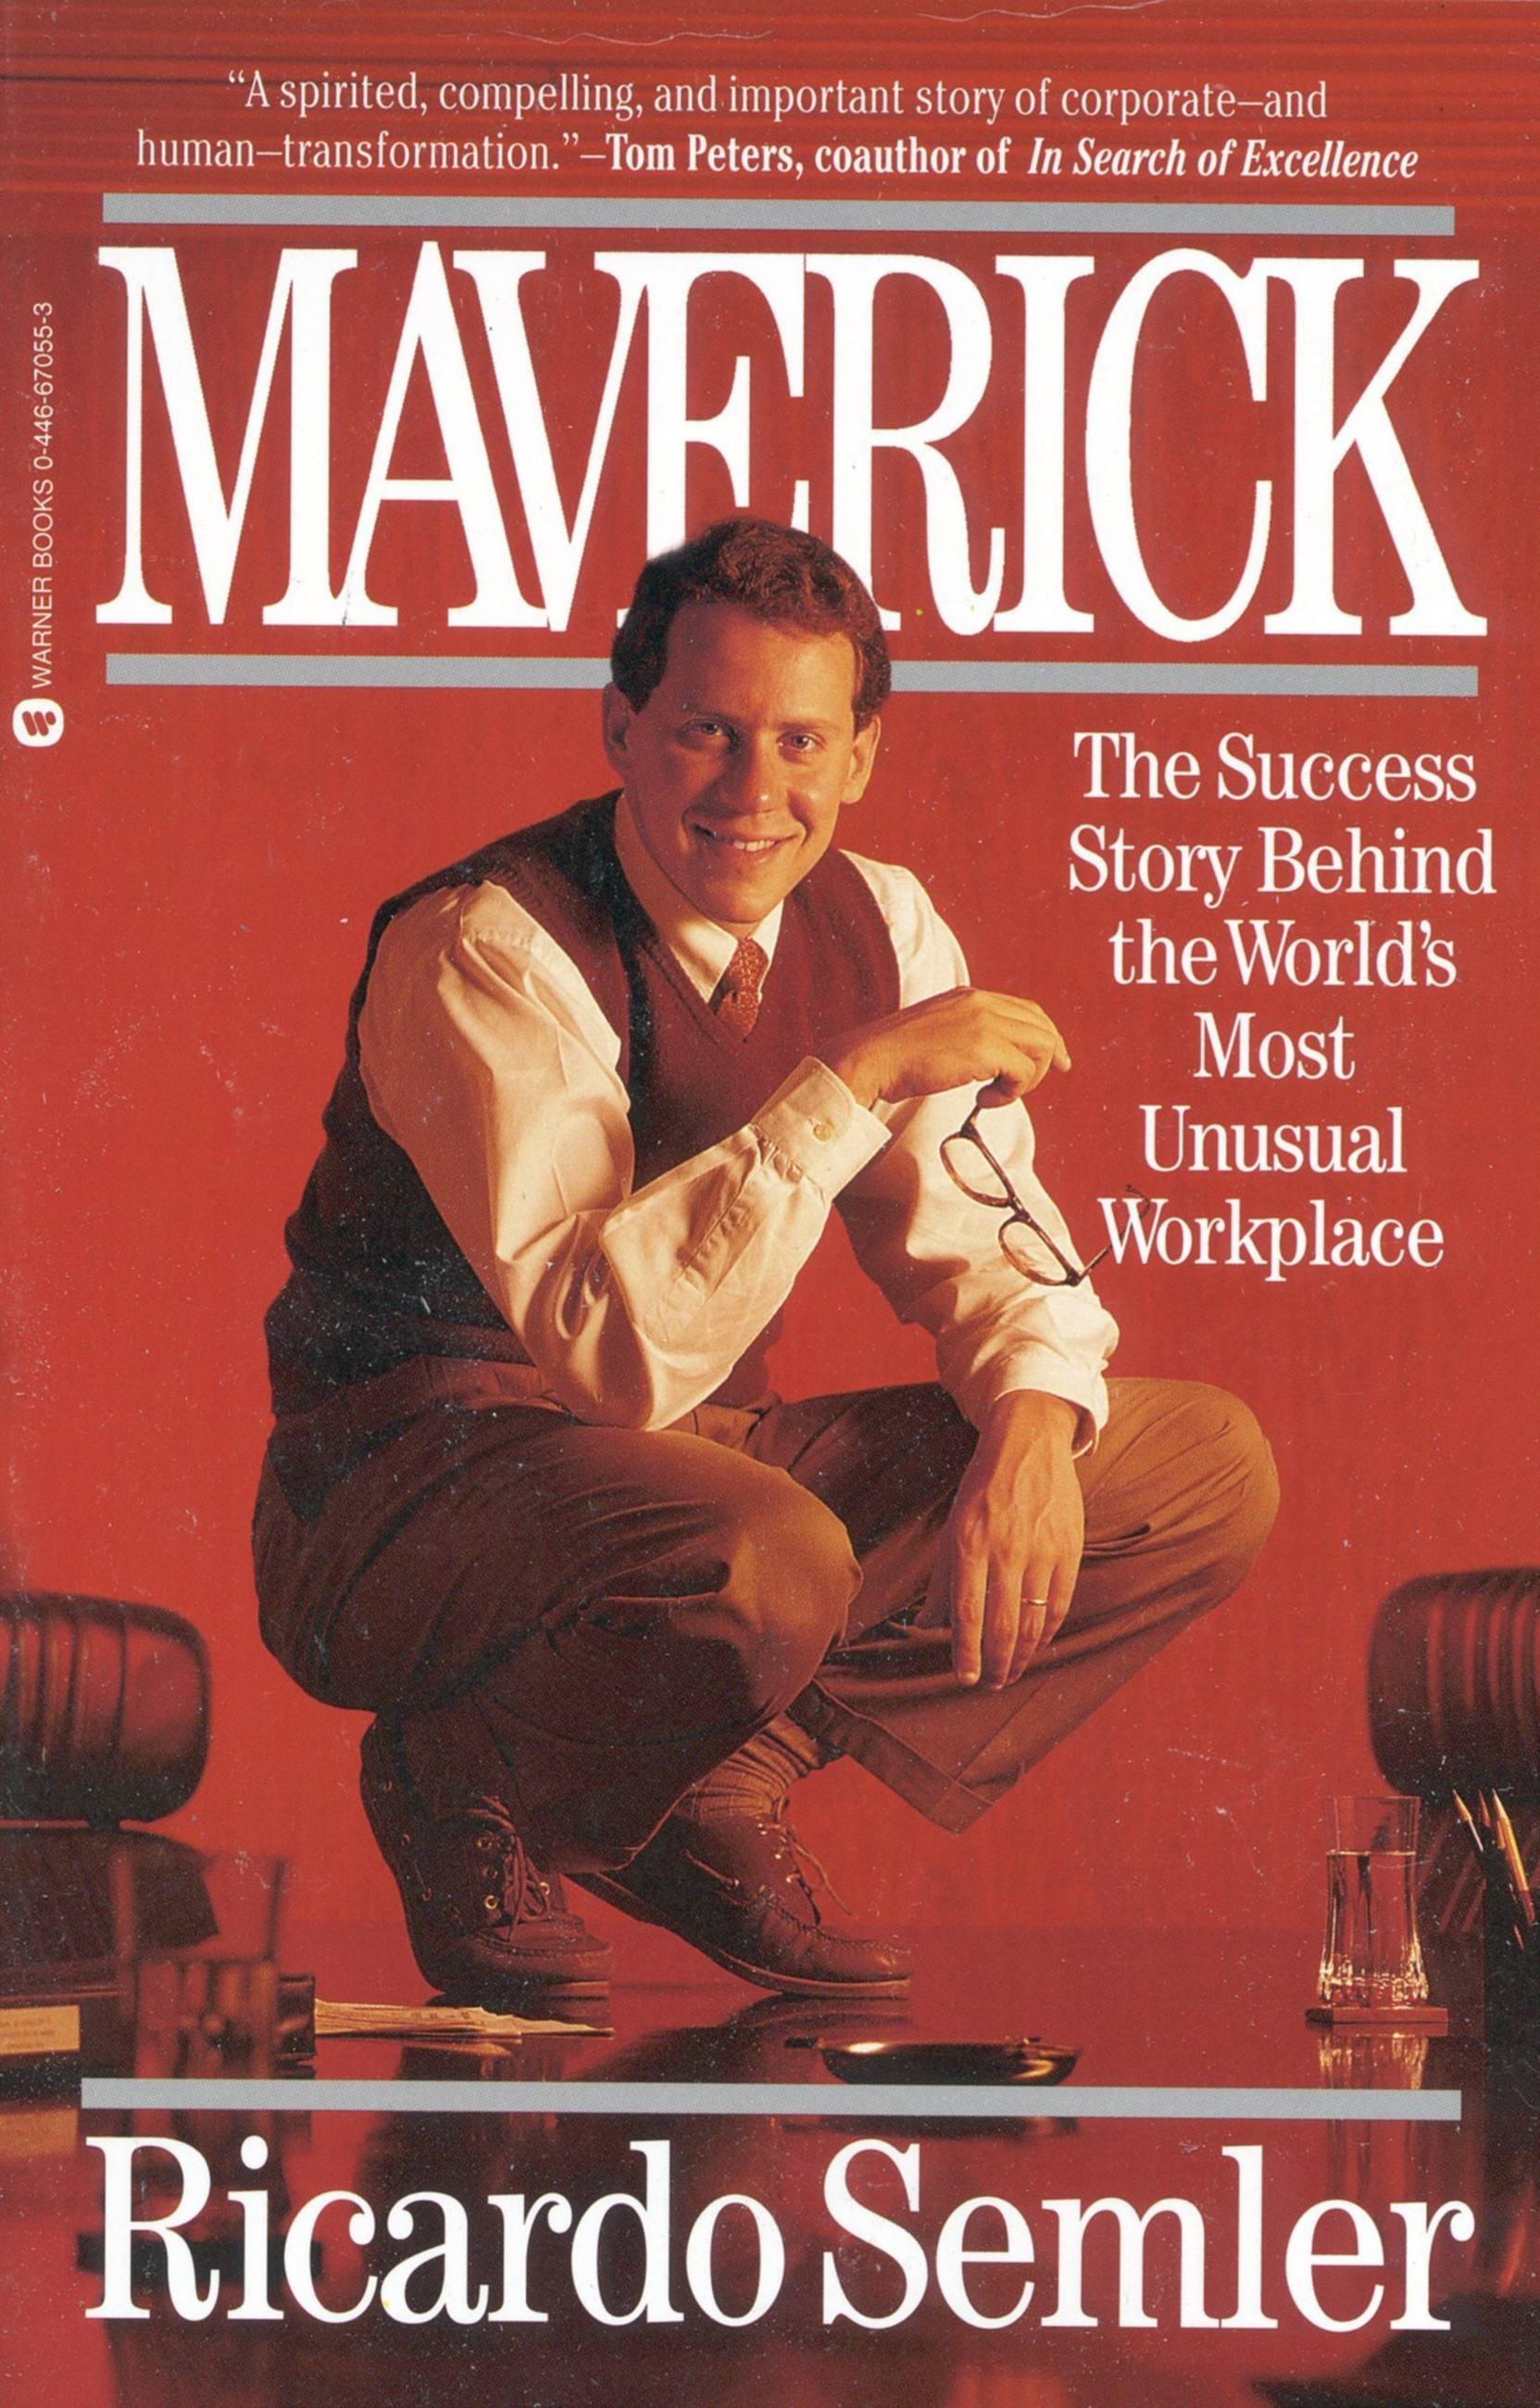 Ricardo Semler: Maverick! (2001, Arrow)